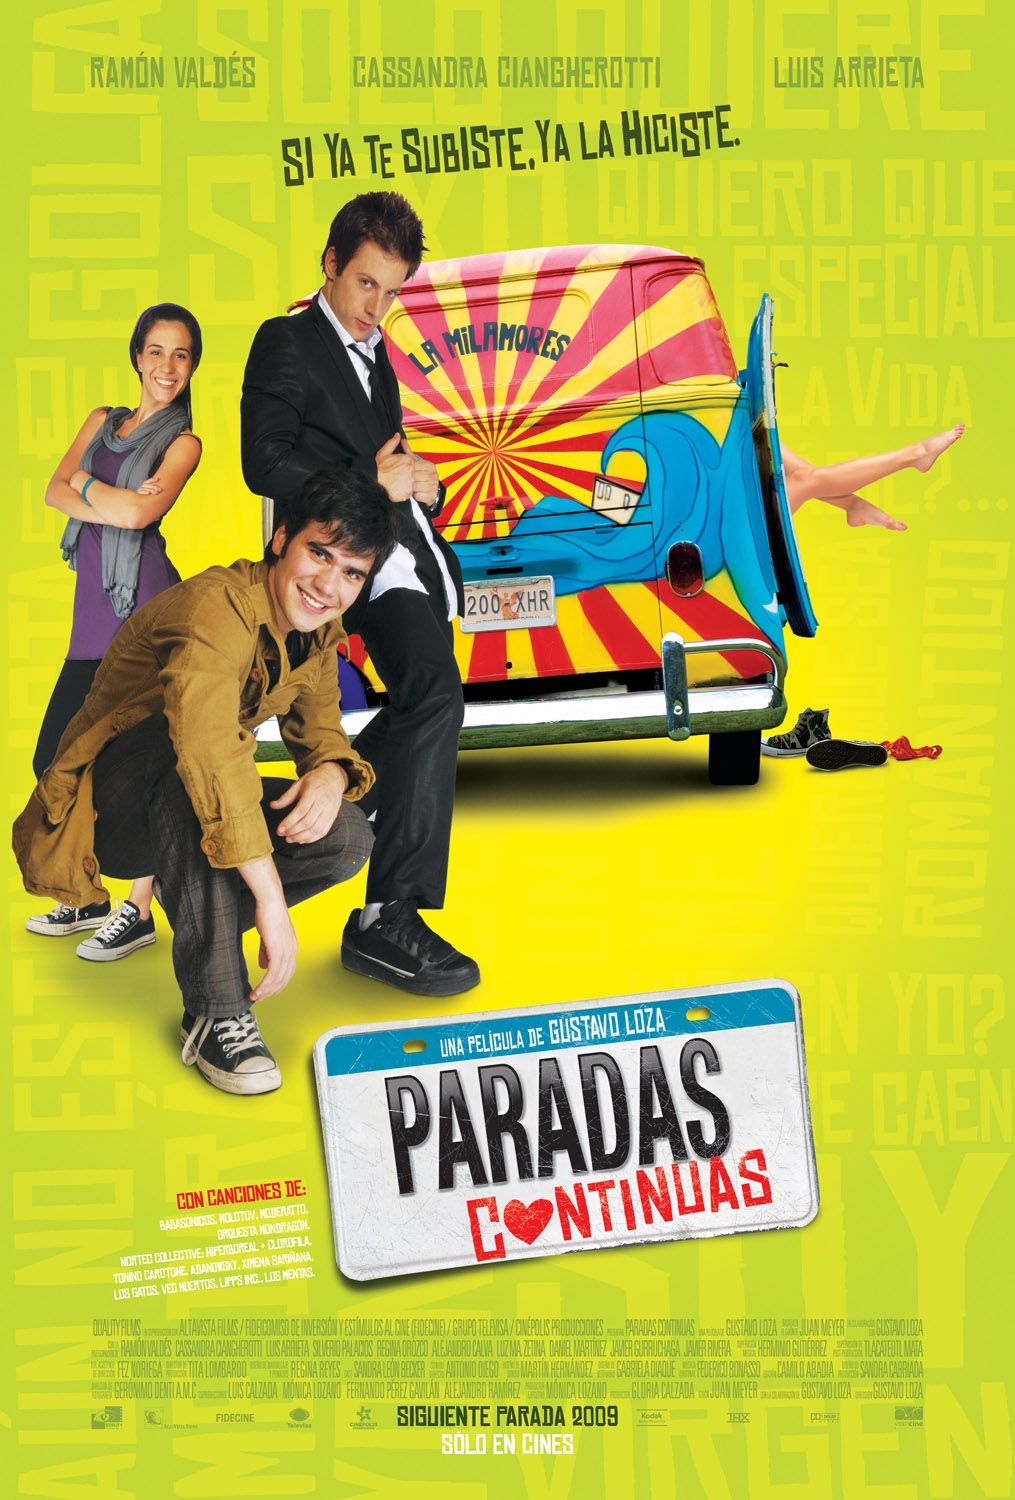 Extra Large Movie Poster Image for Paradas continuas (#1 of 5)